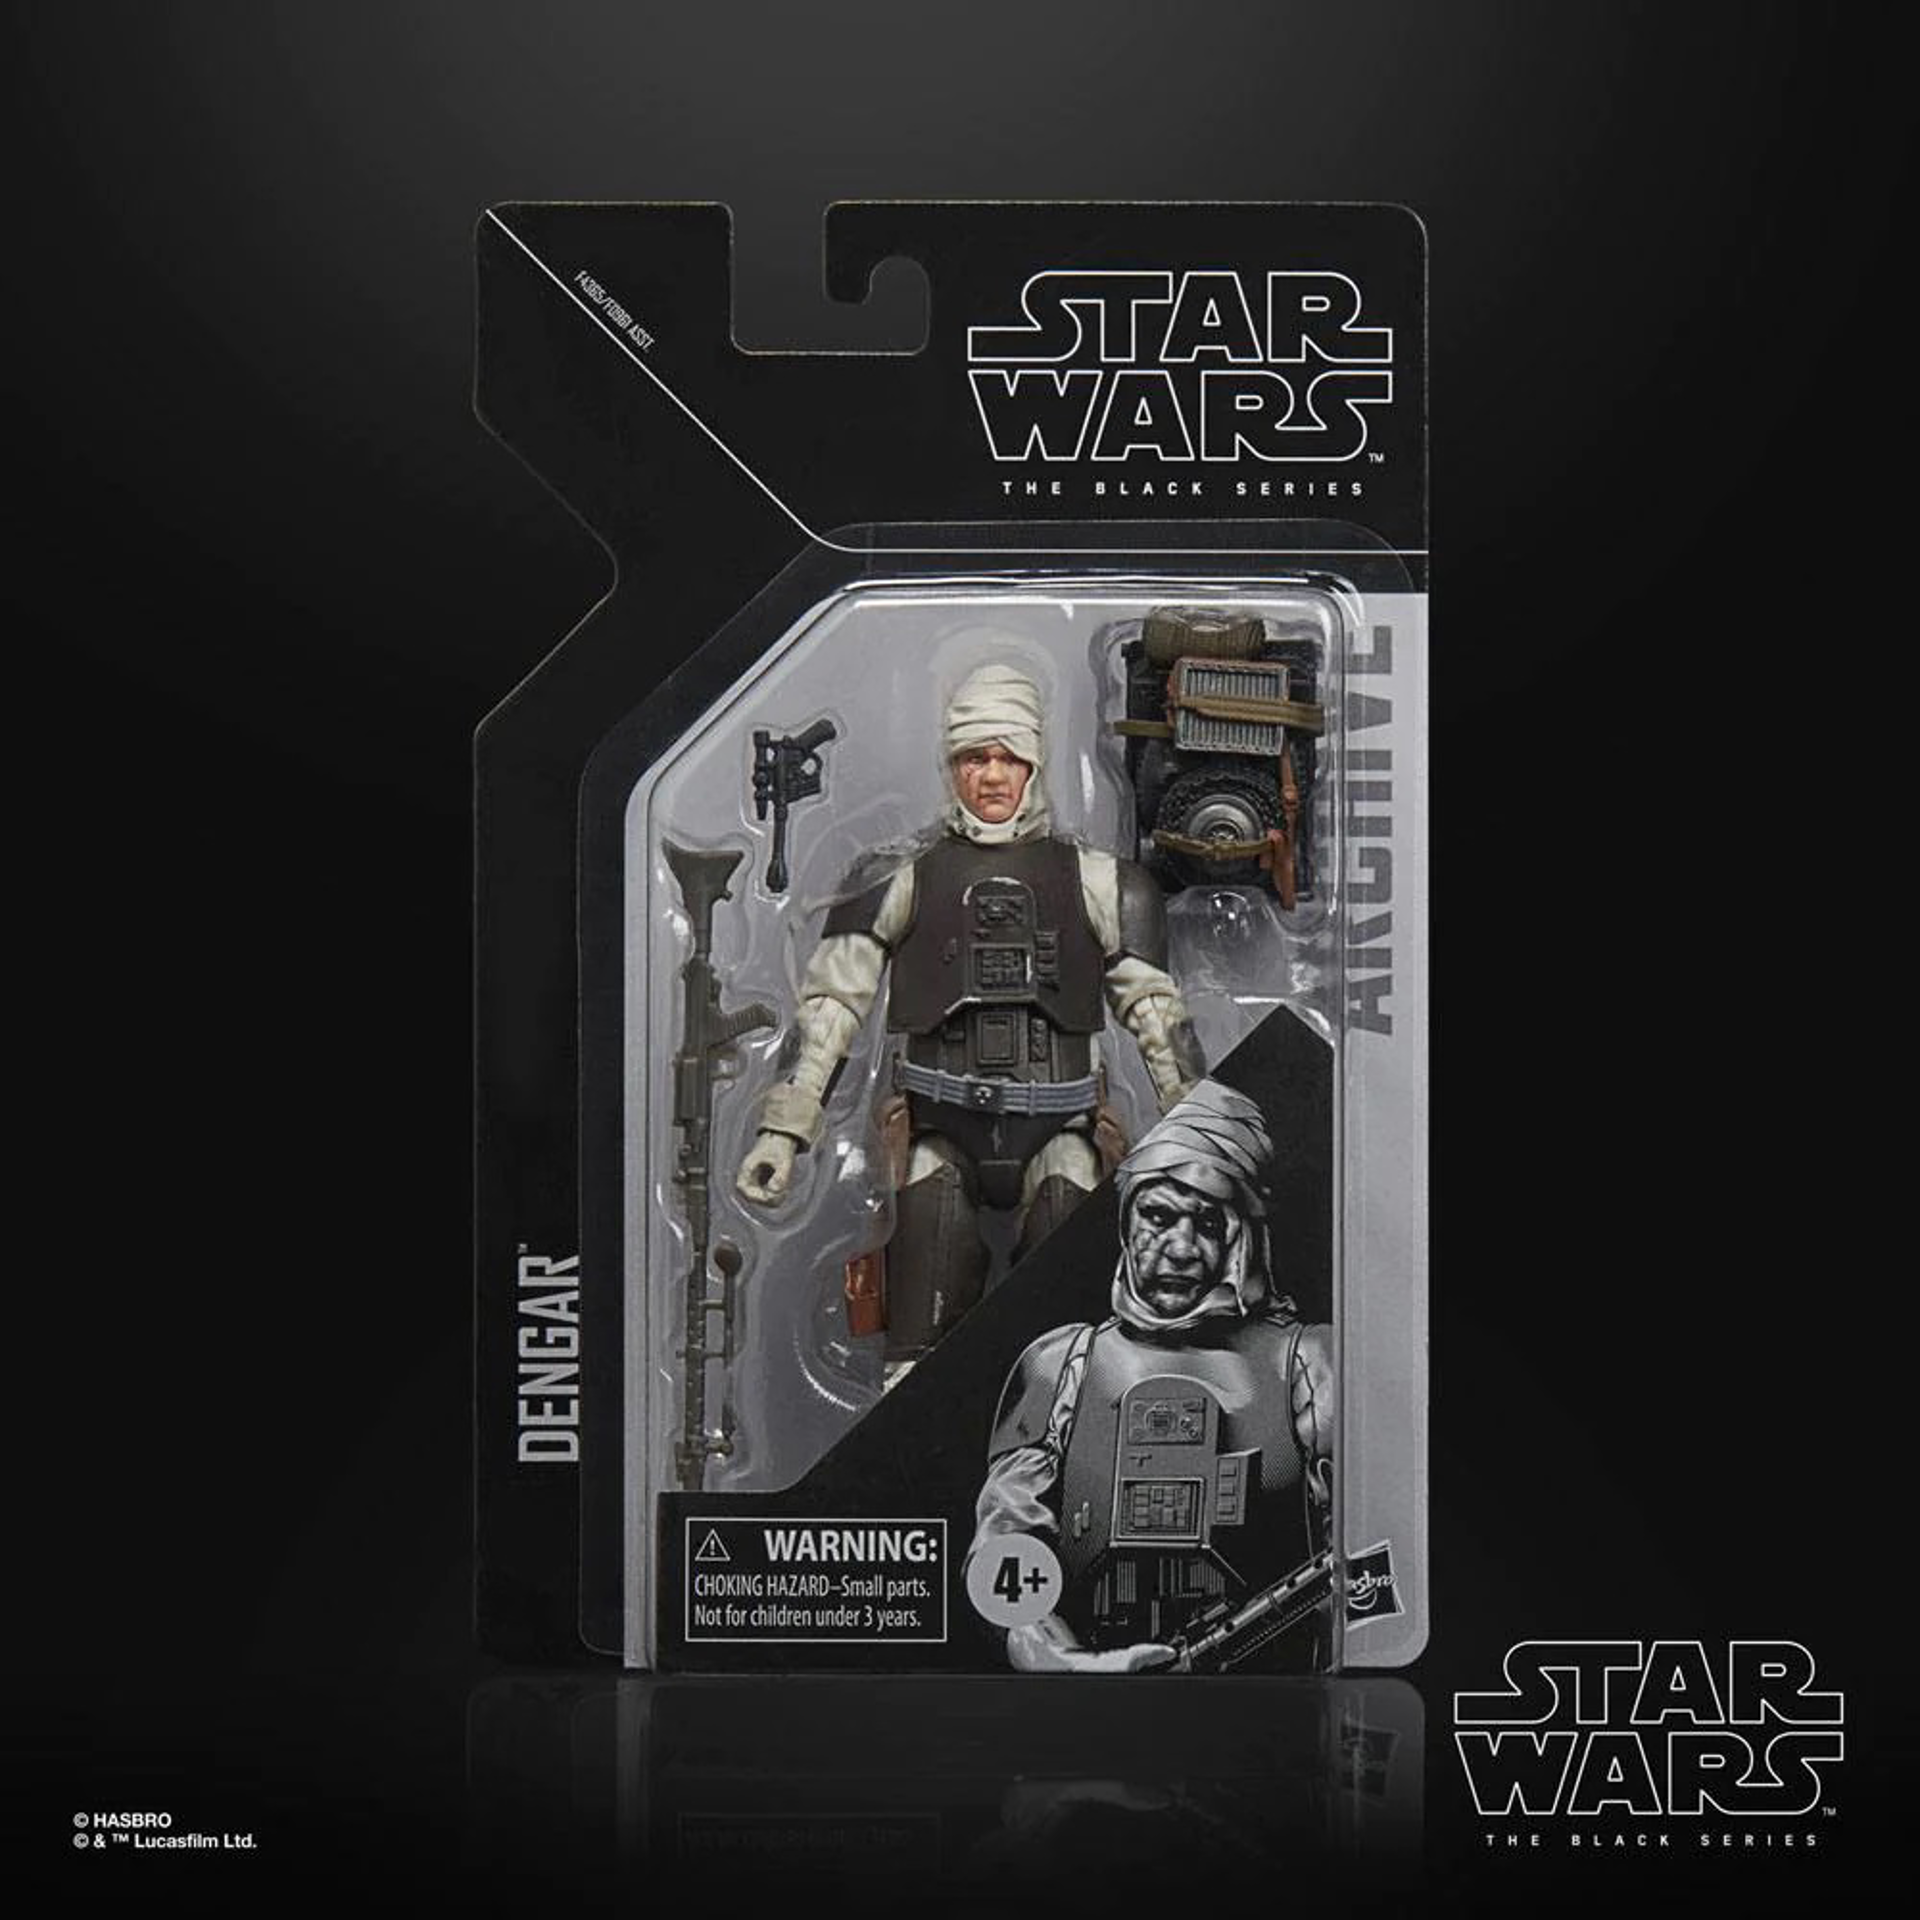 Star Wars The Black Series - Figurine d'action de Dengar 15cm